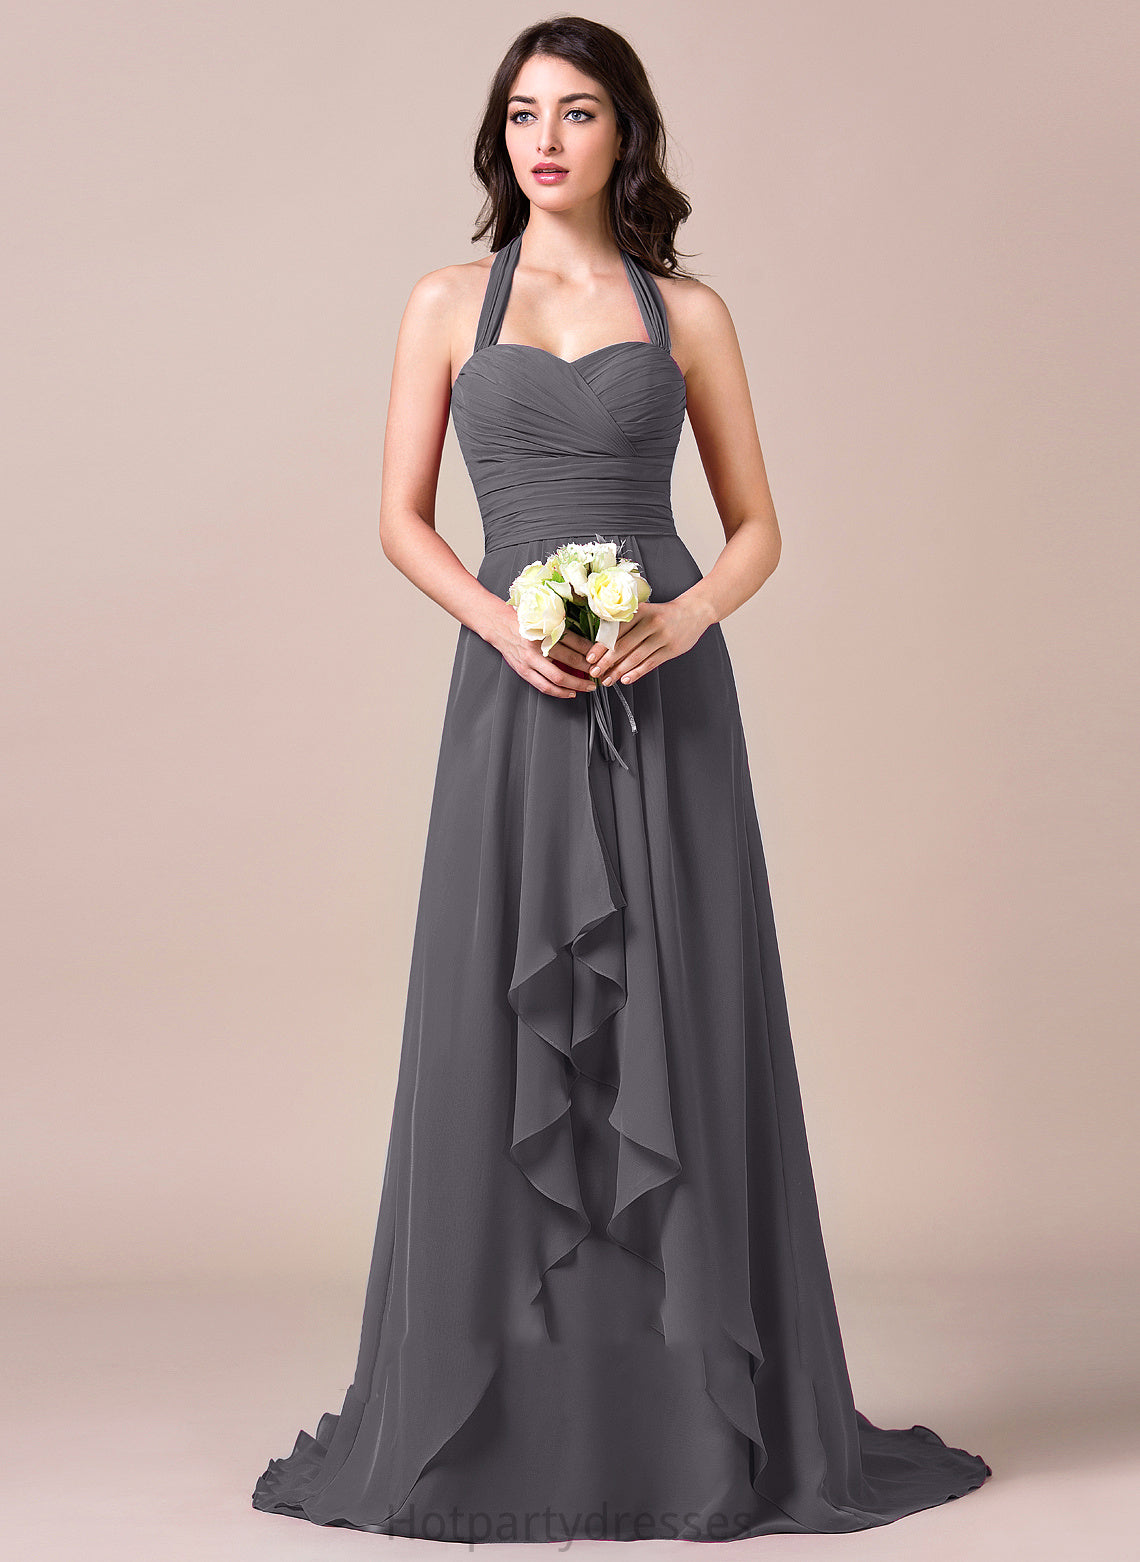 Halter CascadingRuffles Fabric Length SweepTrain Bow(s) Silhouette Embellishment Neckline A-Line Madison Floor Length Bridesmaid Dresses